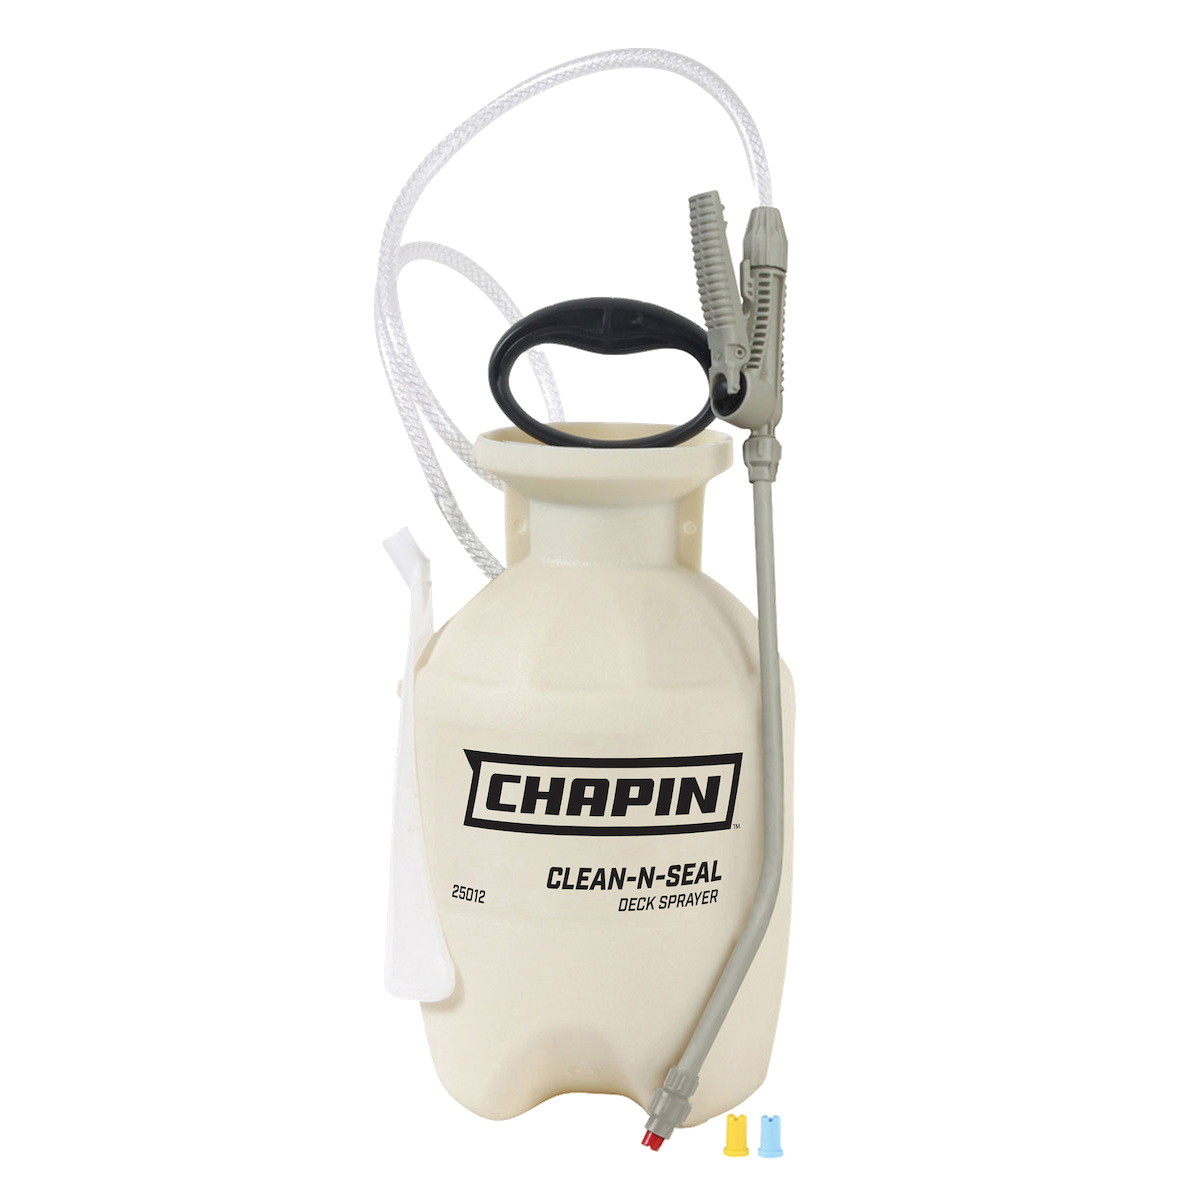 CHAPIN Clean 'N Seal 25012 Handheld Sprayer, 1 gal Tank, Poly Tank, 34 in L Hose